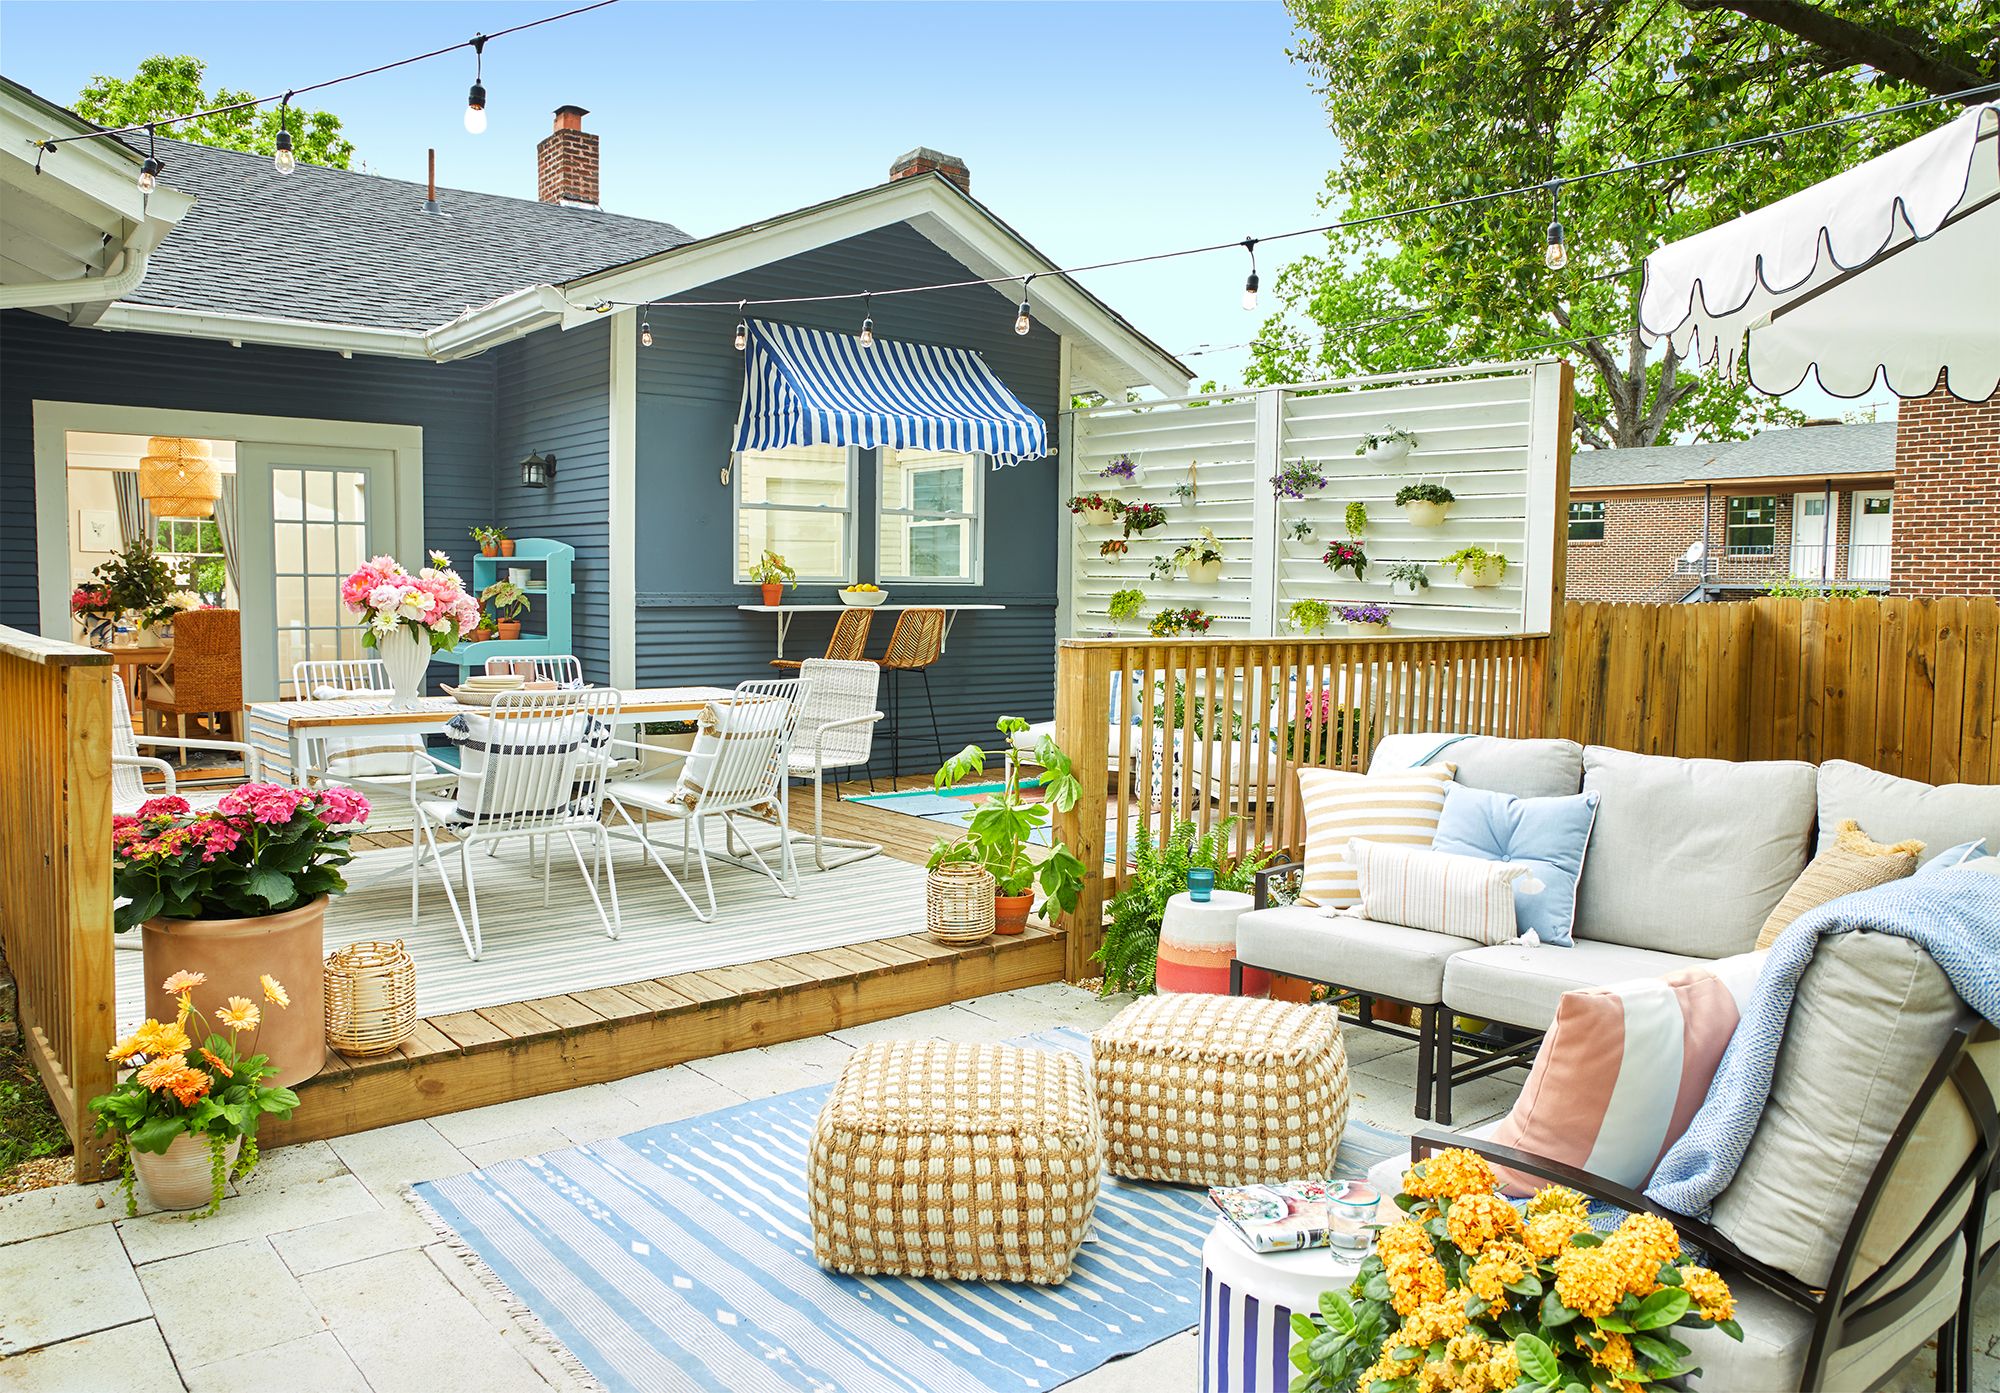 25 small backyard ideas - small backyard landscaping and patio designs